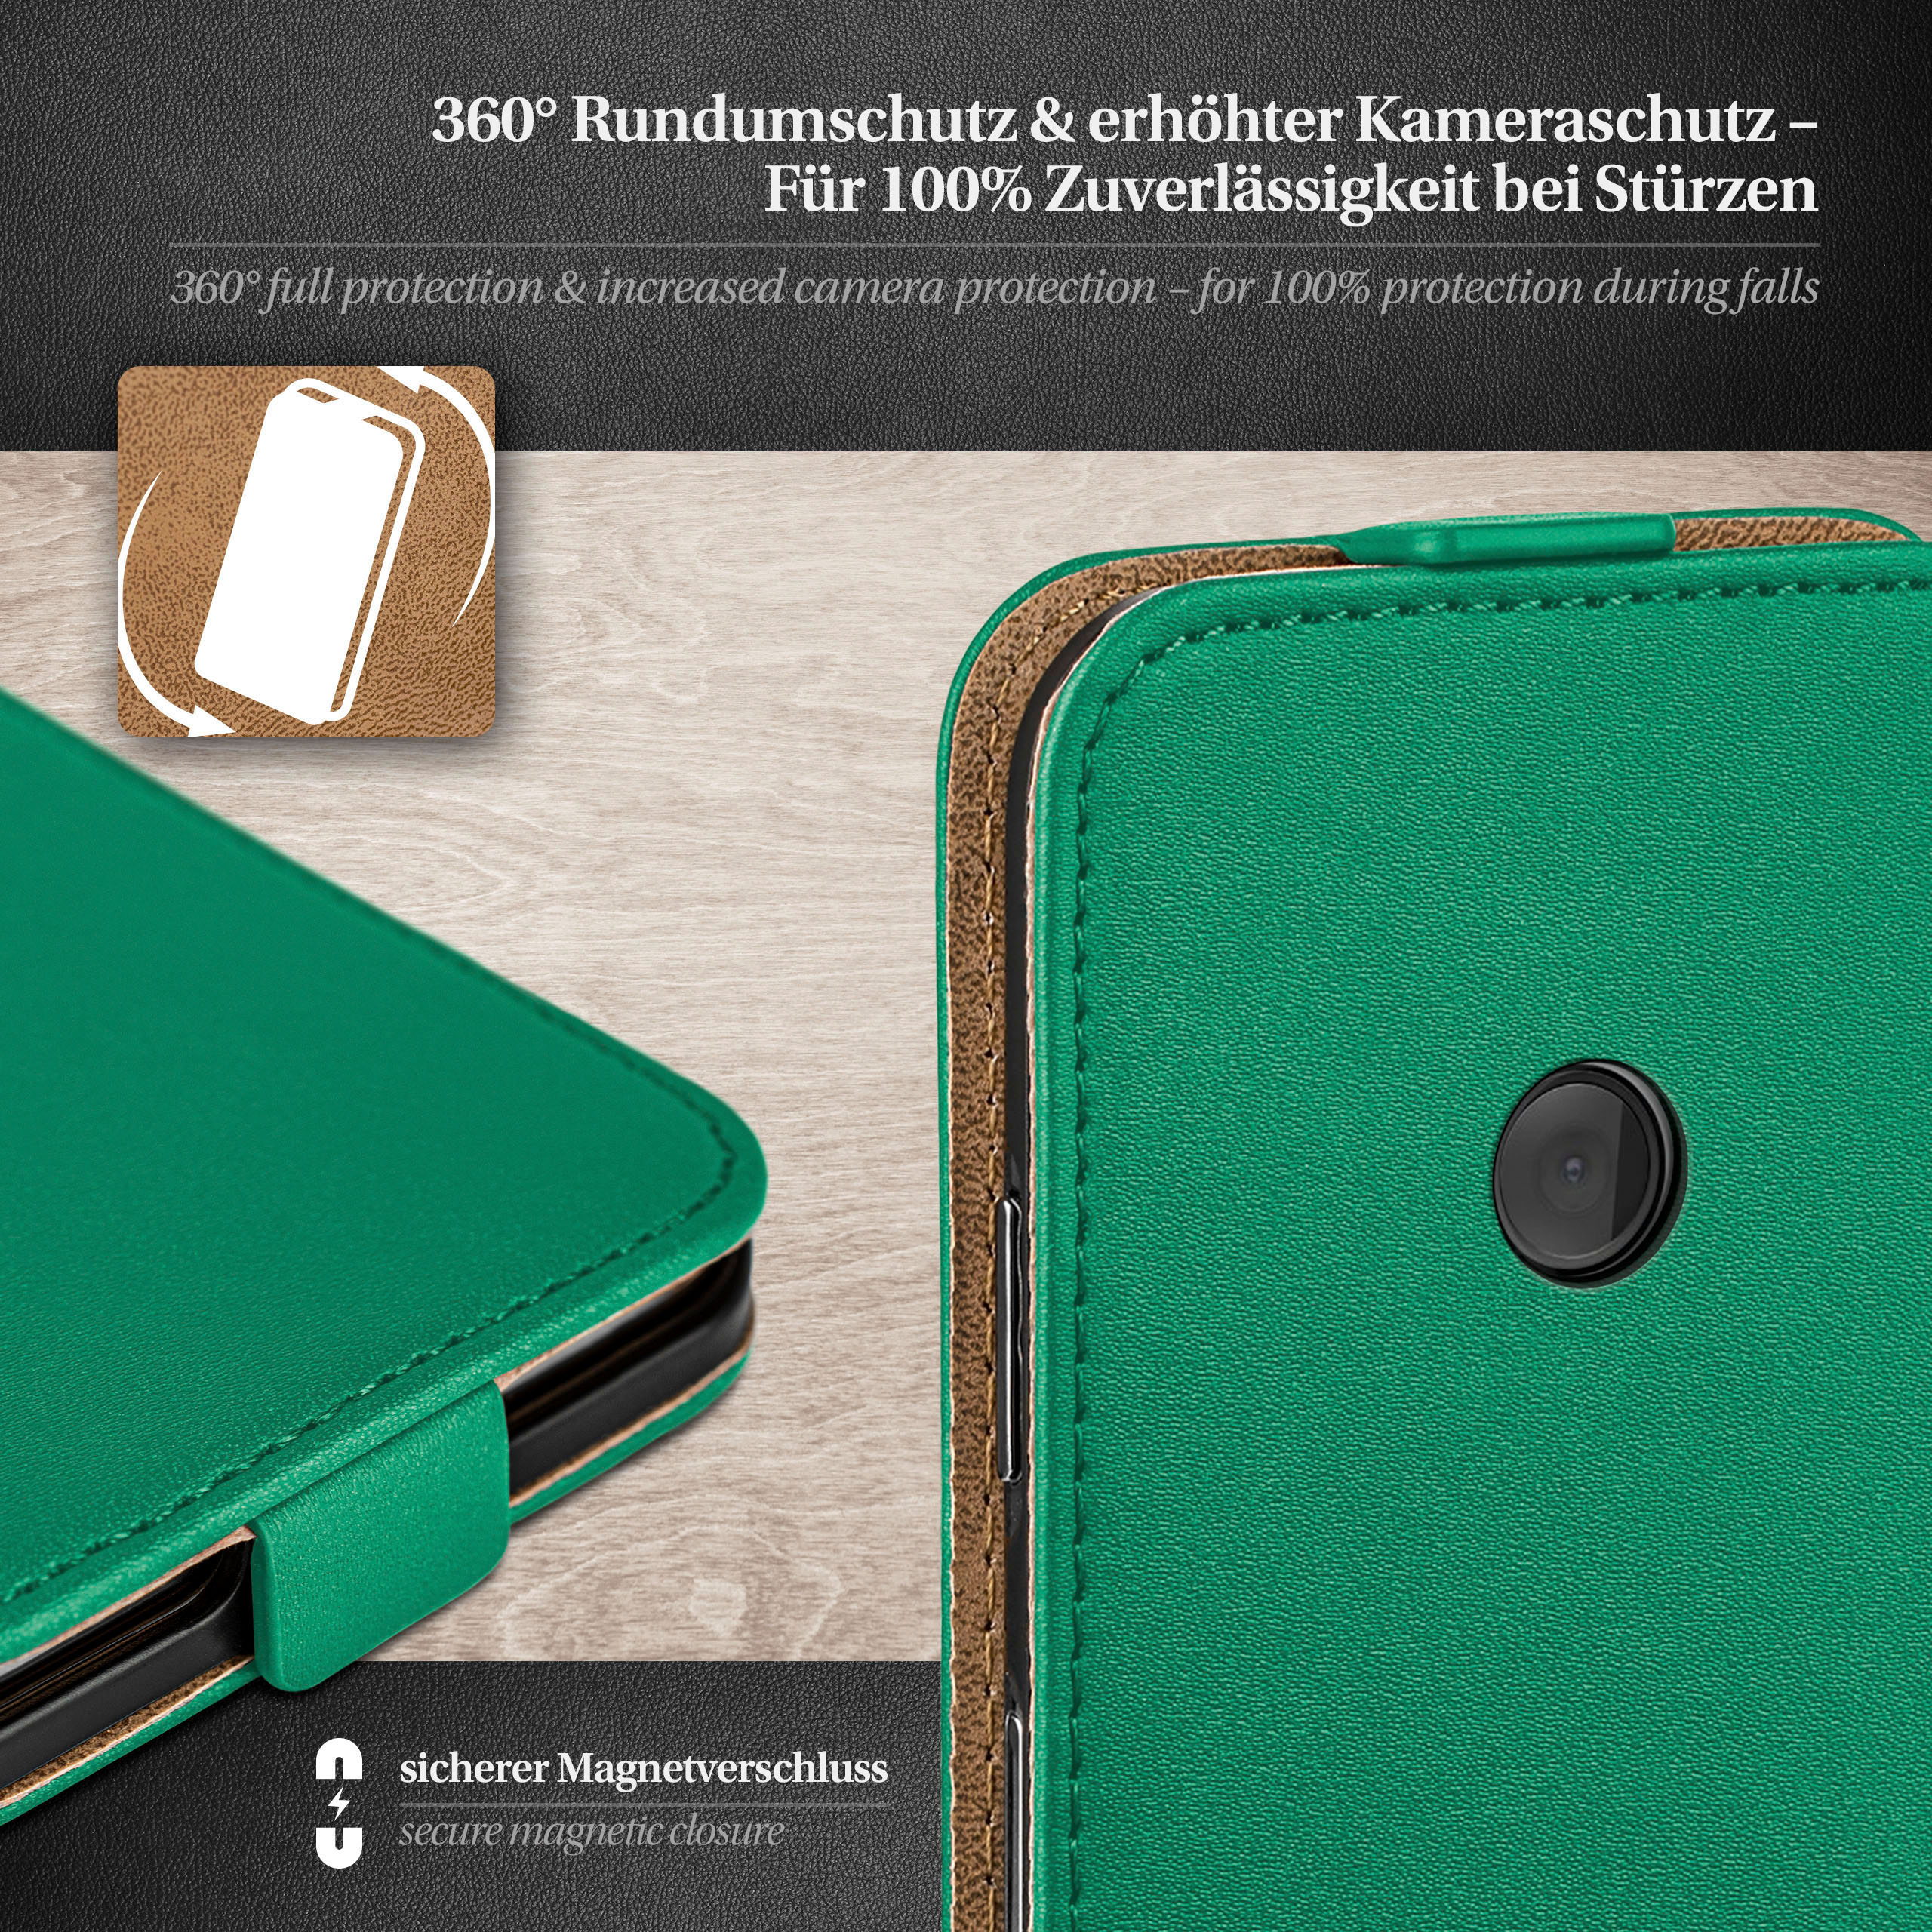 Lumia Flip MOEX Emerald-Green Nokia, Case, Flip 520/525, Cover,